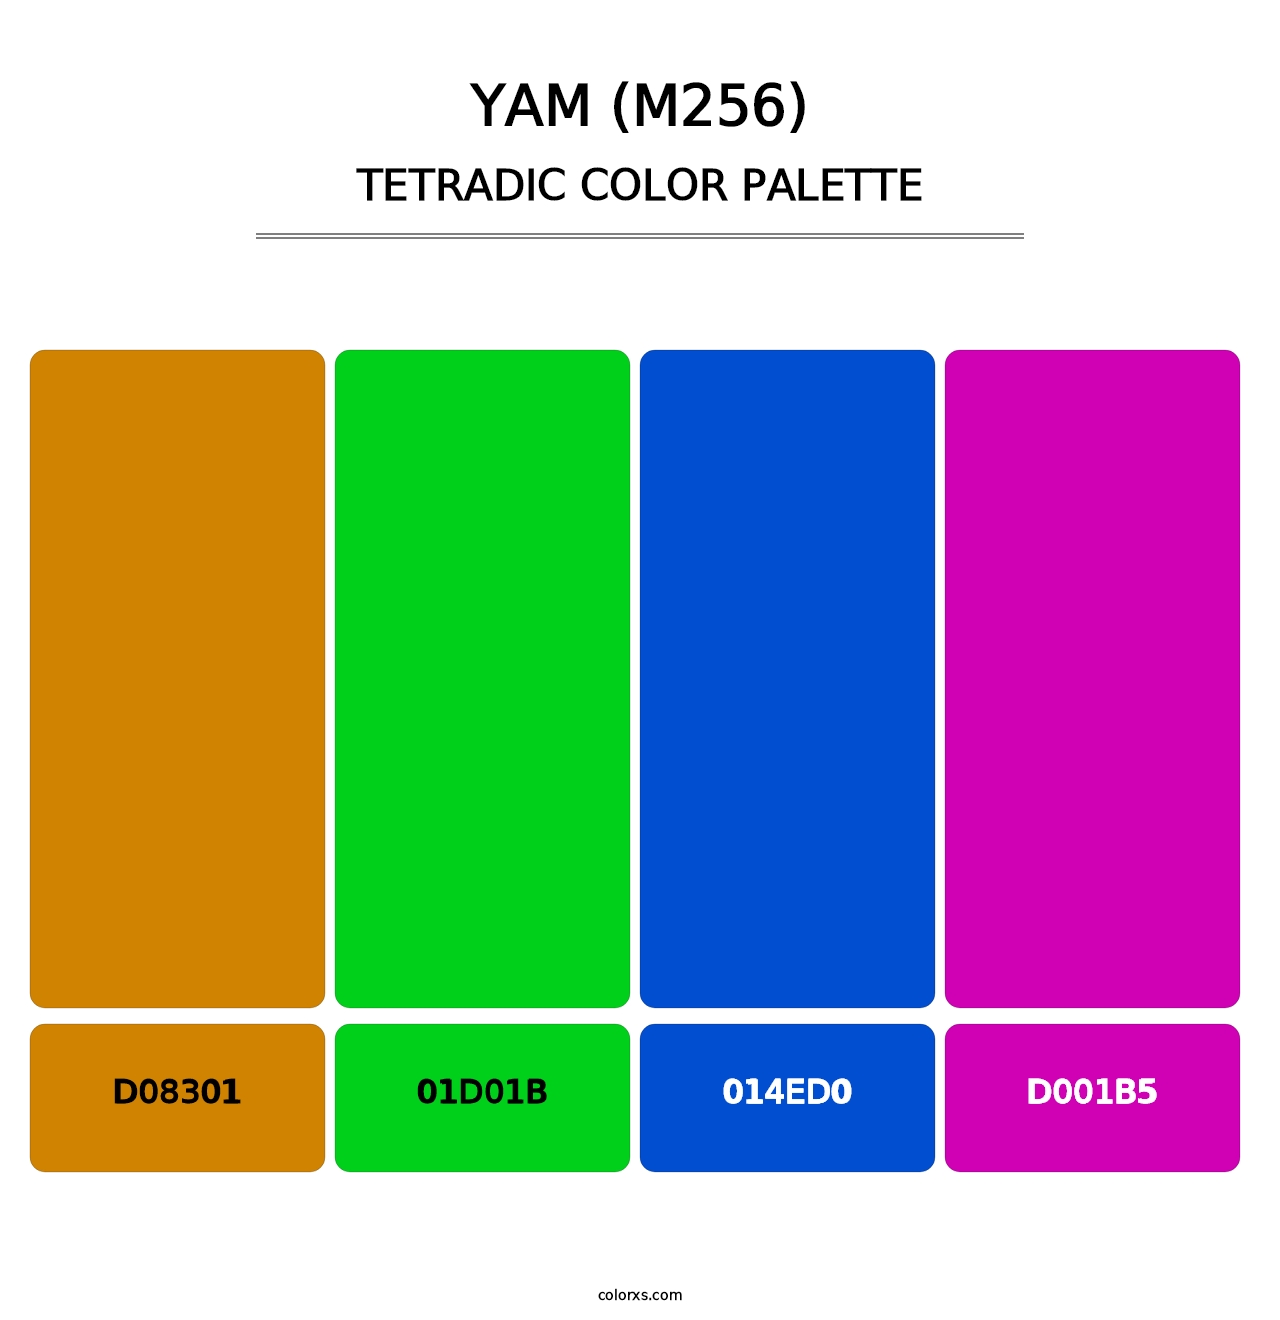 Yam (M256) - Tetradic Color Palette